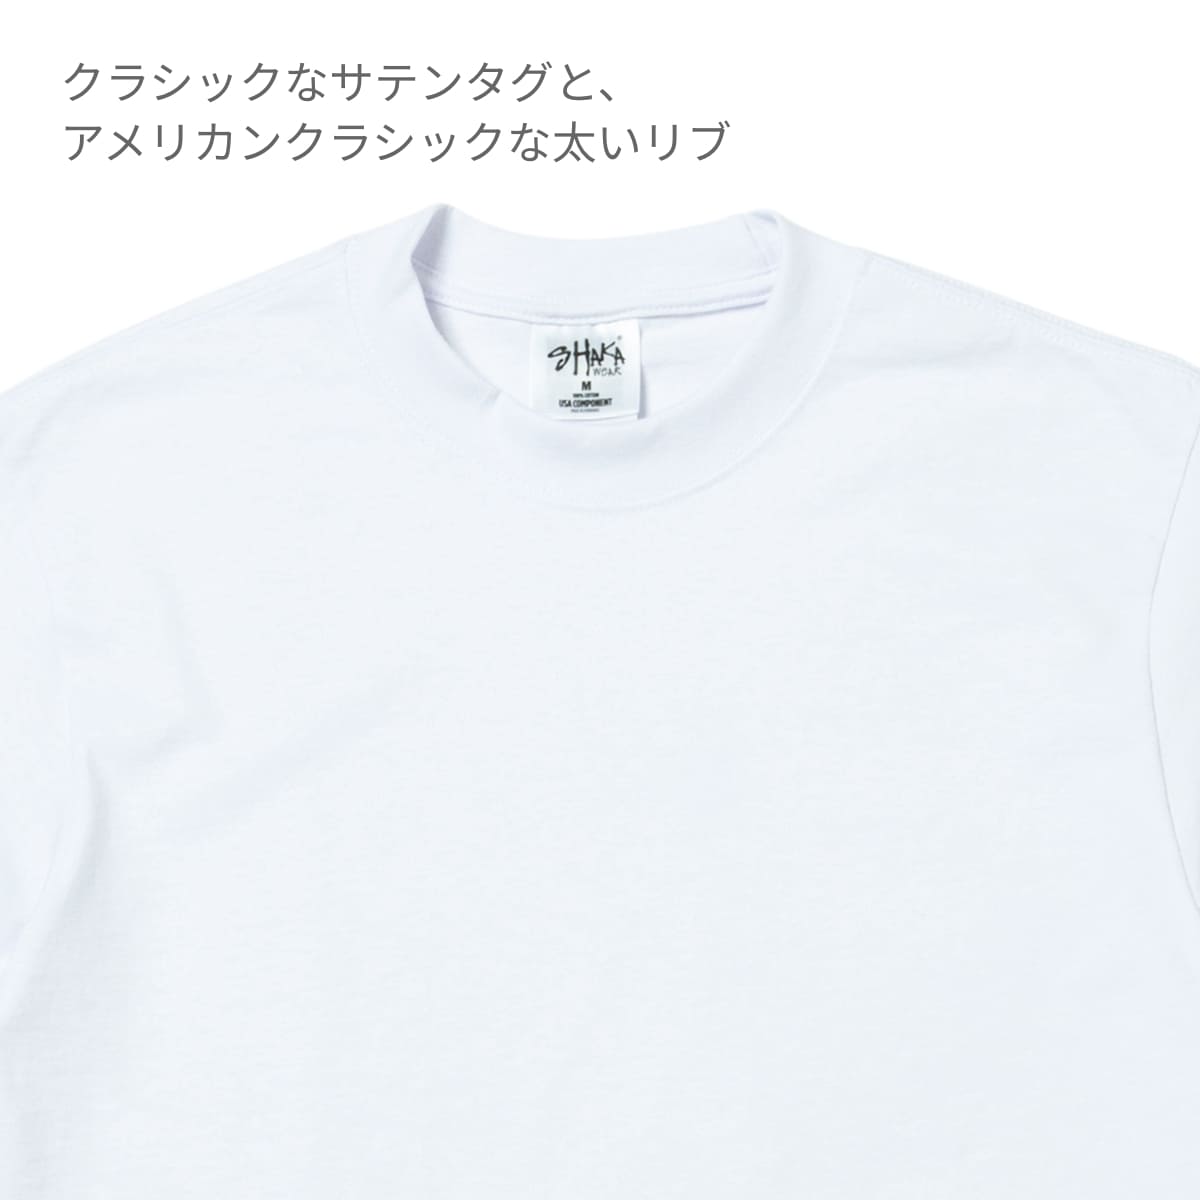 7.5oz マックスヘビーウェイトTシャツ | ビッグサイズ | 1枚 | SHMHSS | ホワイト